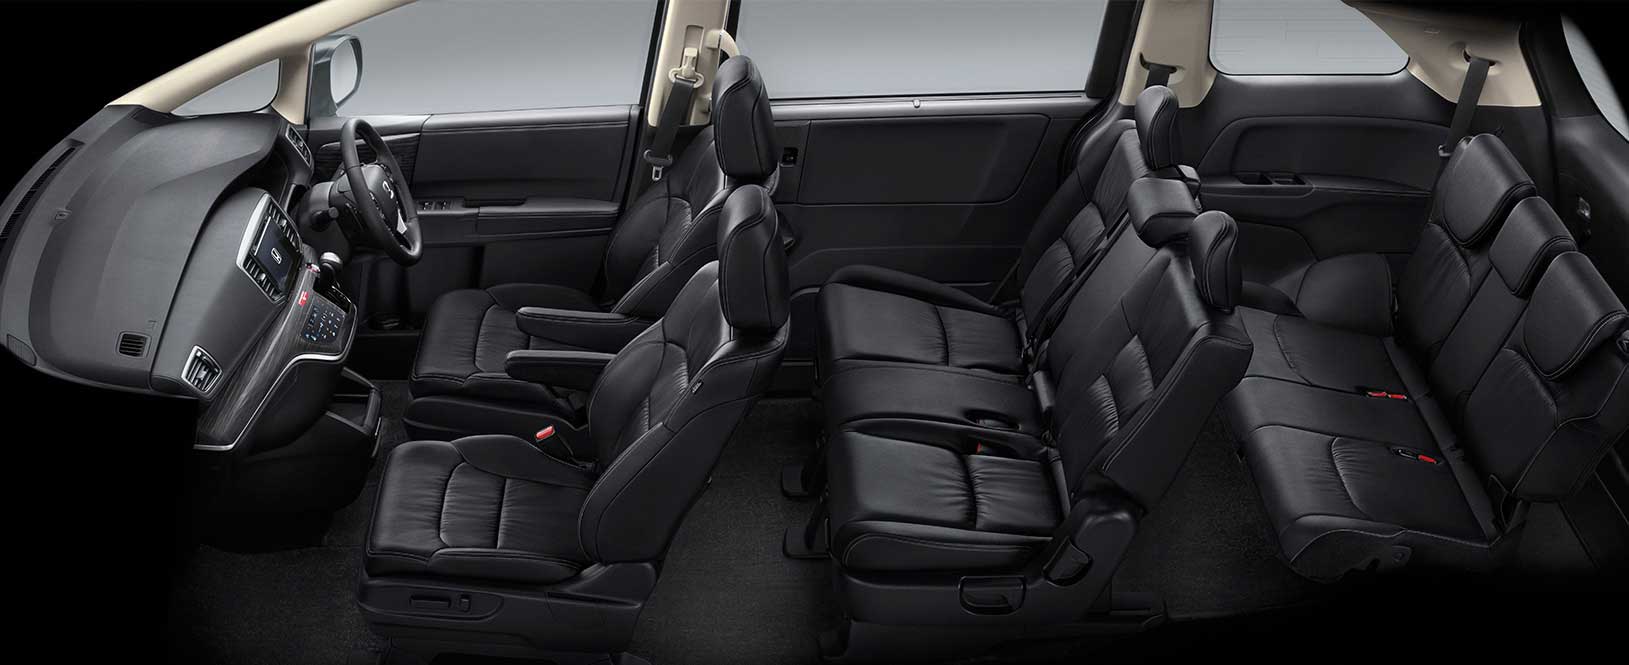 Honda Odyssey VTi L Interior seats